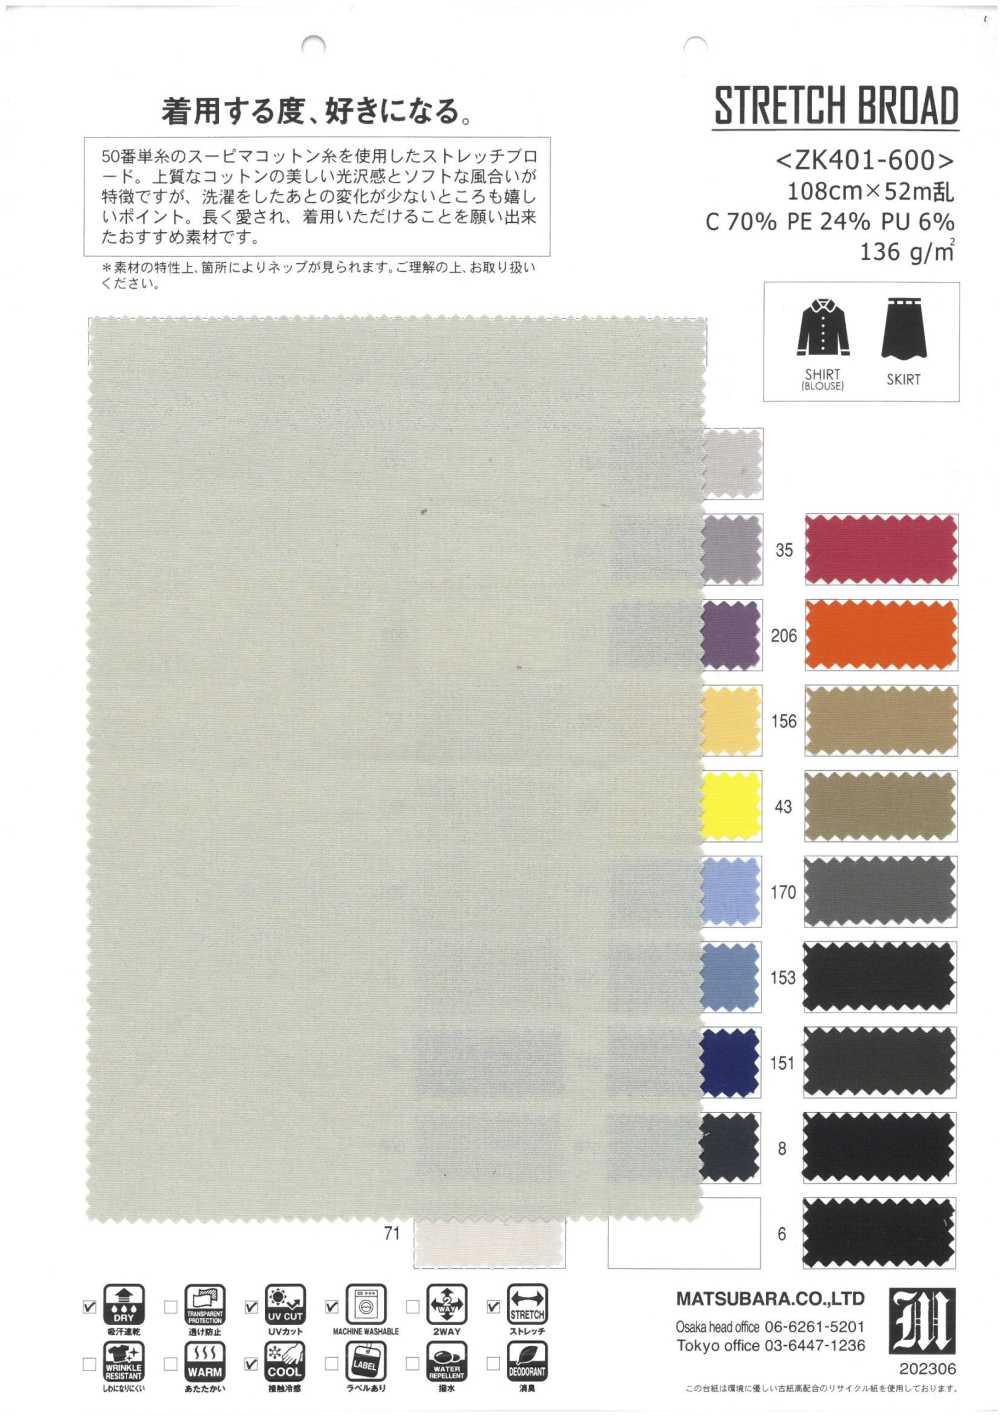 ZK401-600 STRETCH BROAD[Textile / Fabric] Matsubara